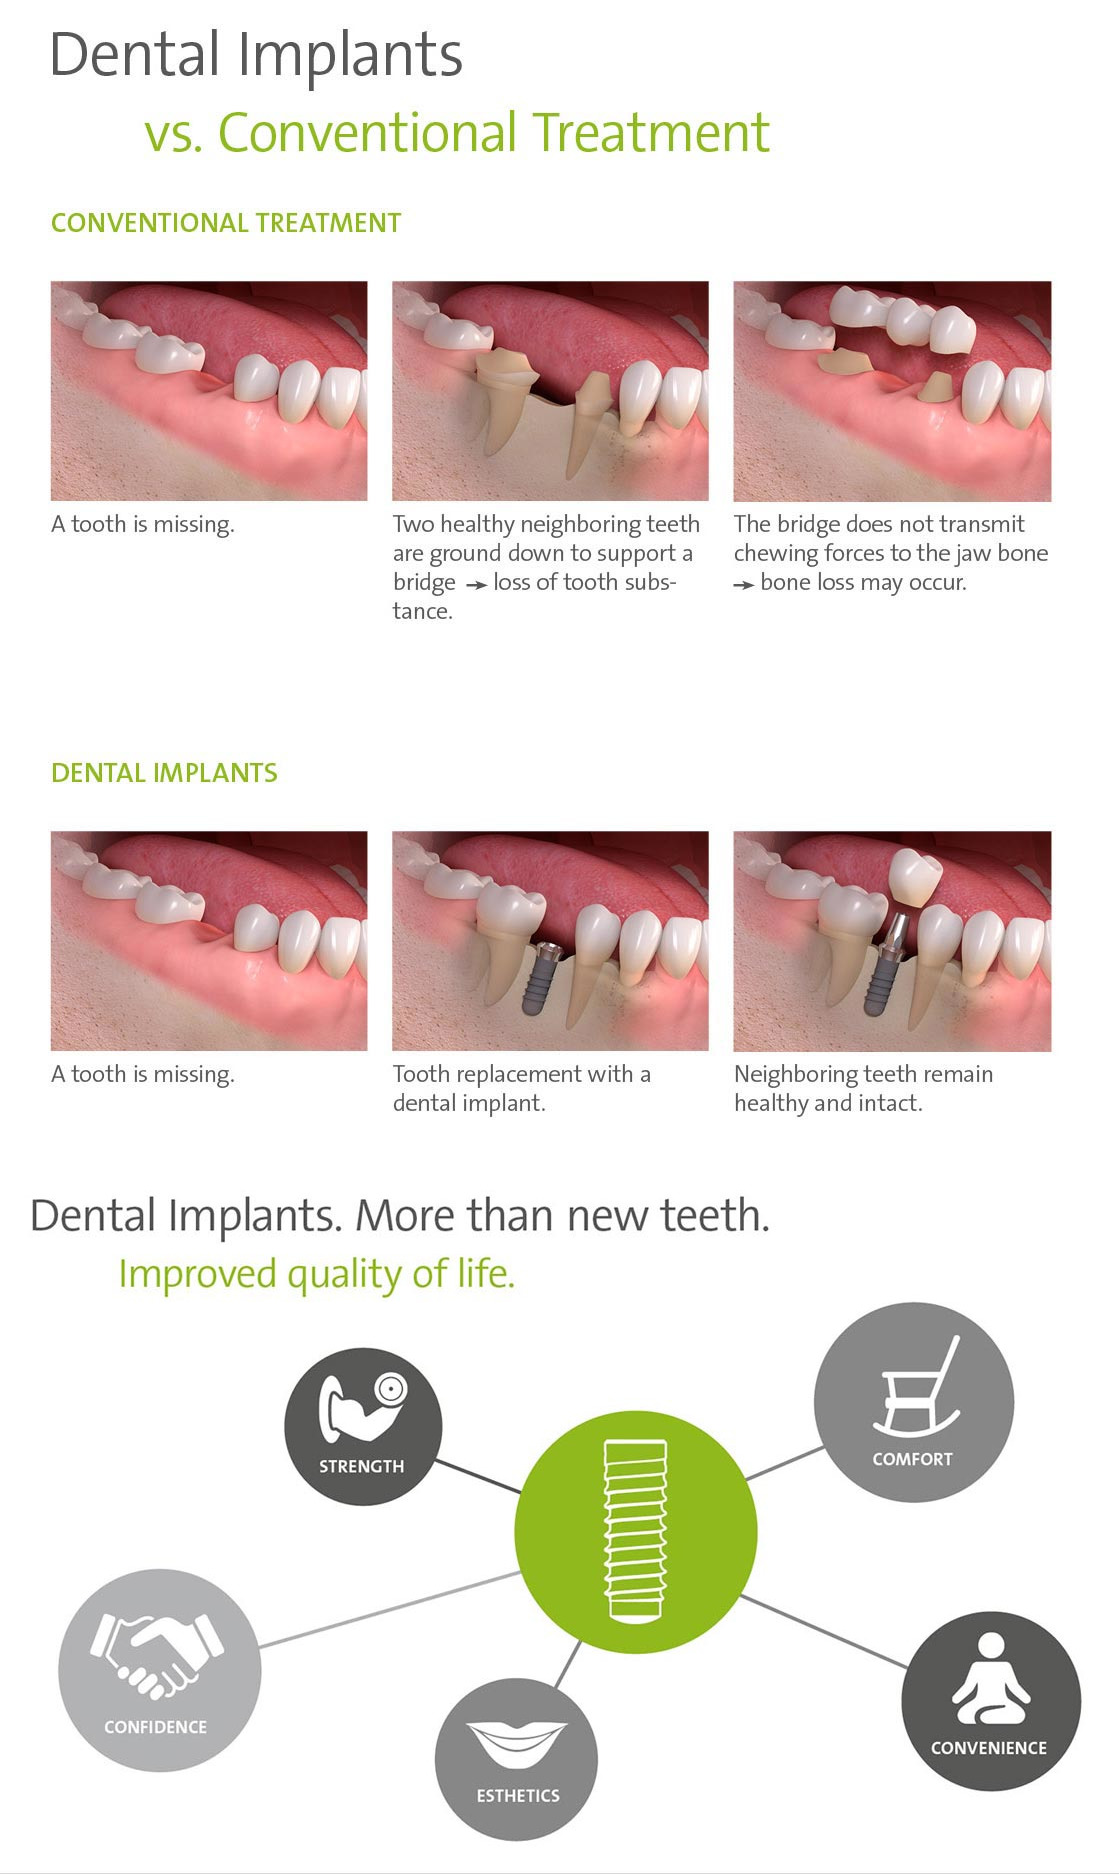 Bay-2-Dental-implants-V39s-conventional-implants-Bay-3-Dental-Implants-more-than-new-teeth-